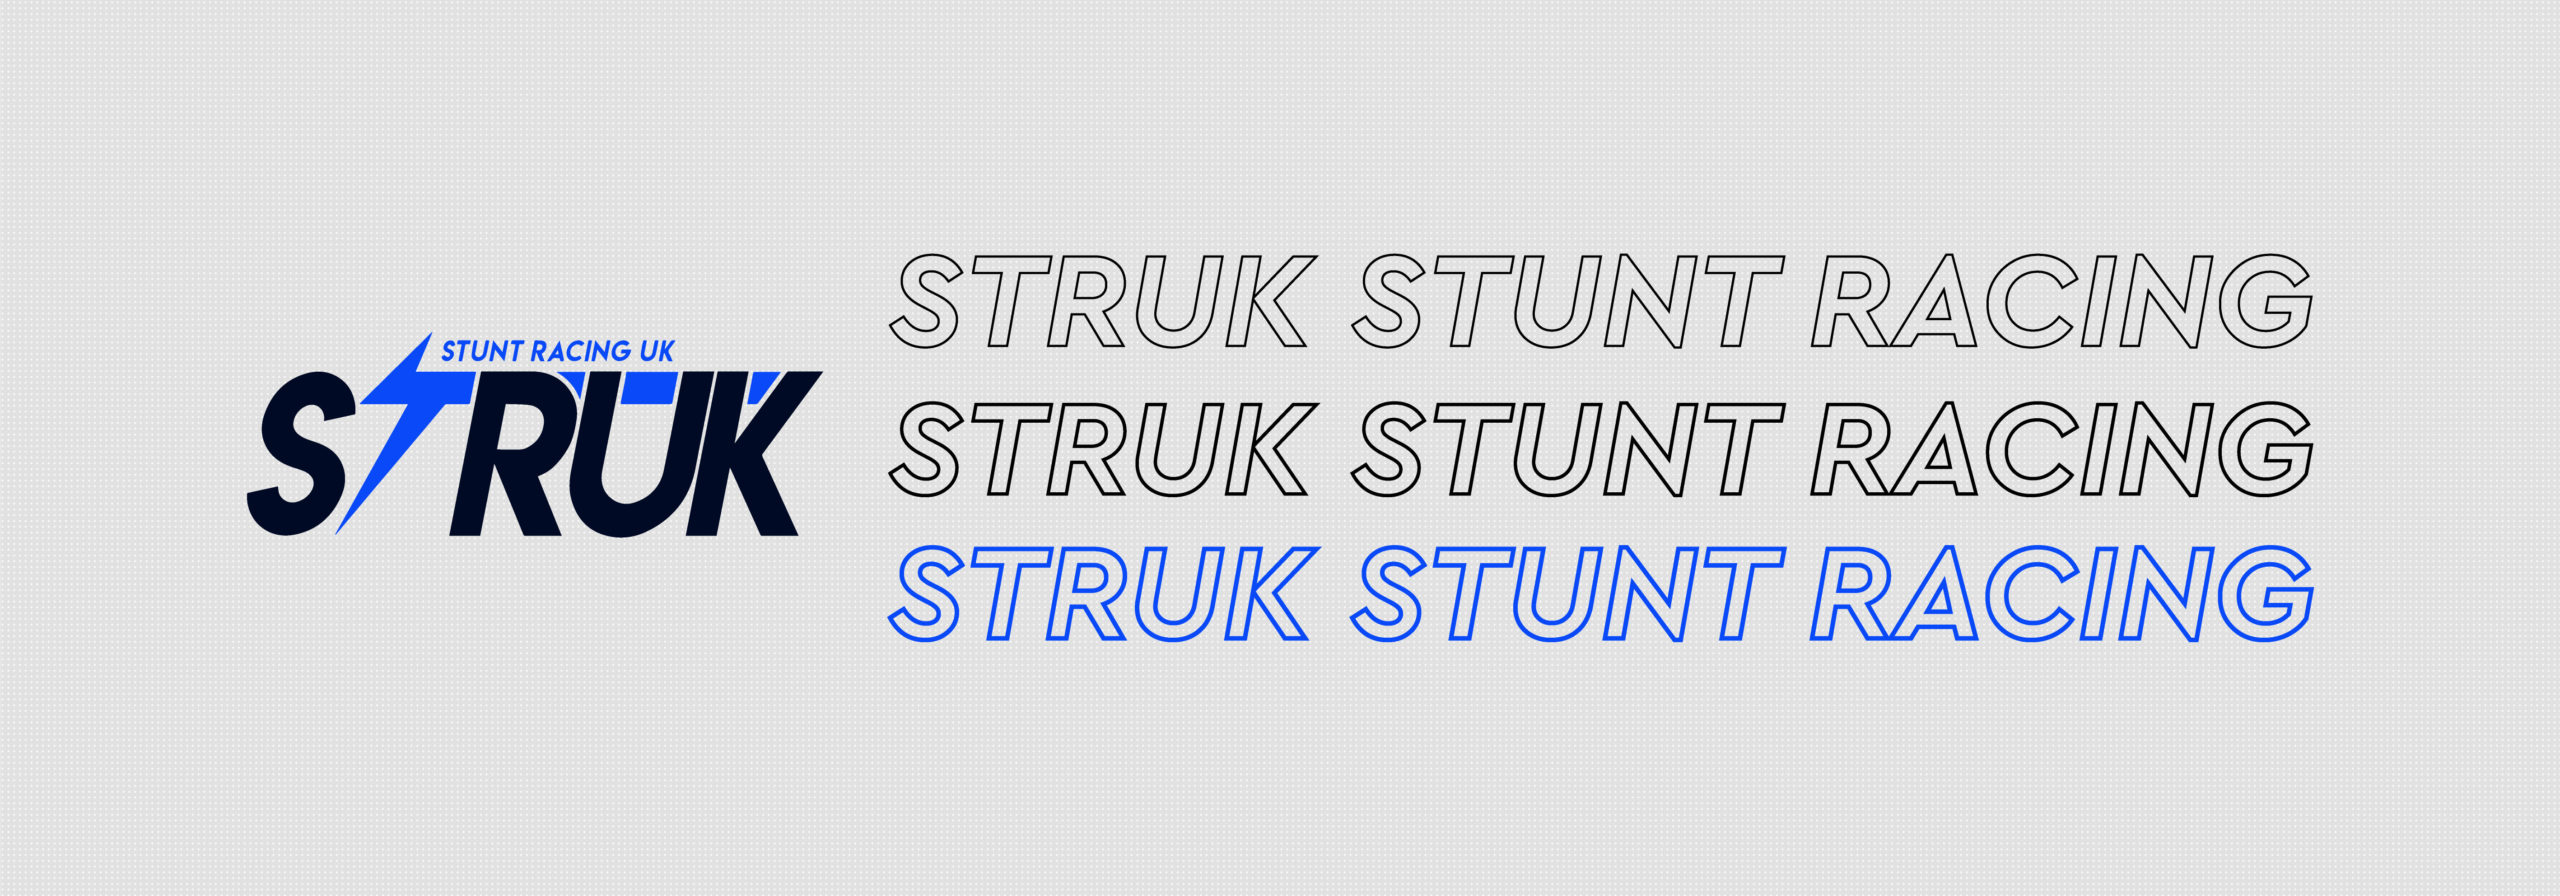 STRUK Events Ltd